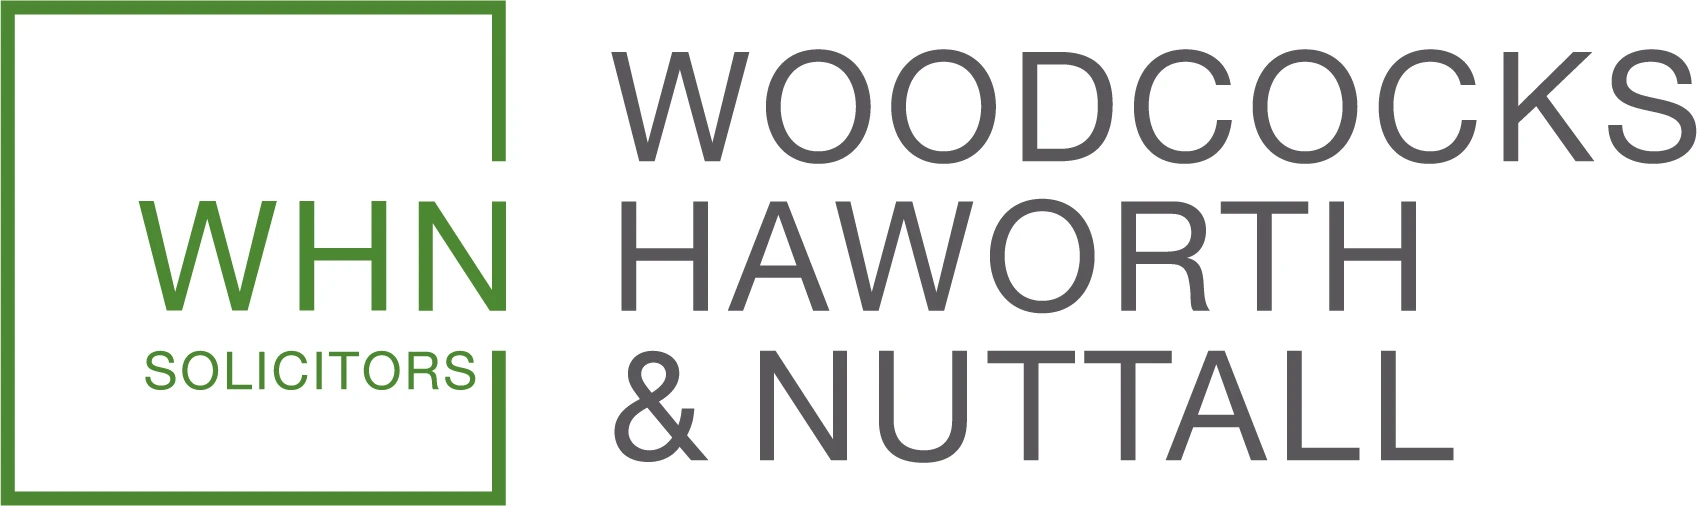 Woodcocks Haworth & Nuttall Solicitors Logo